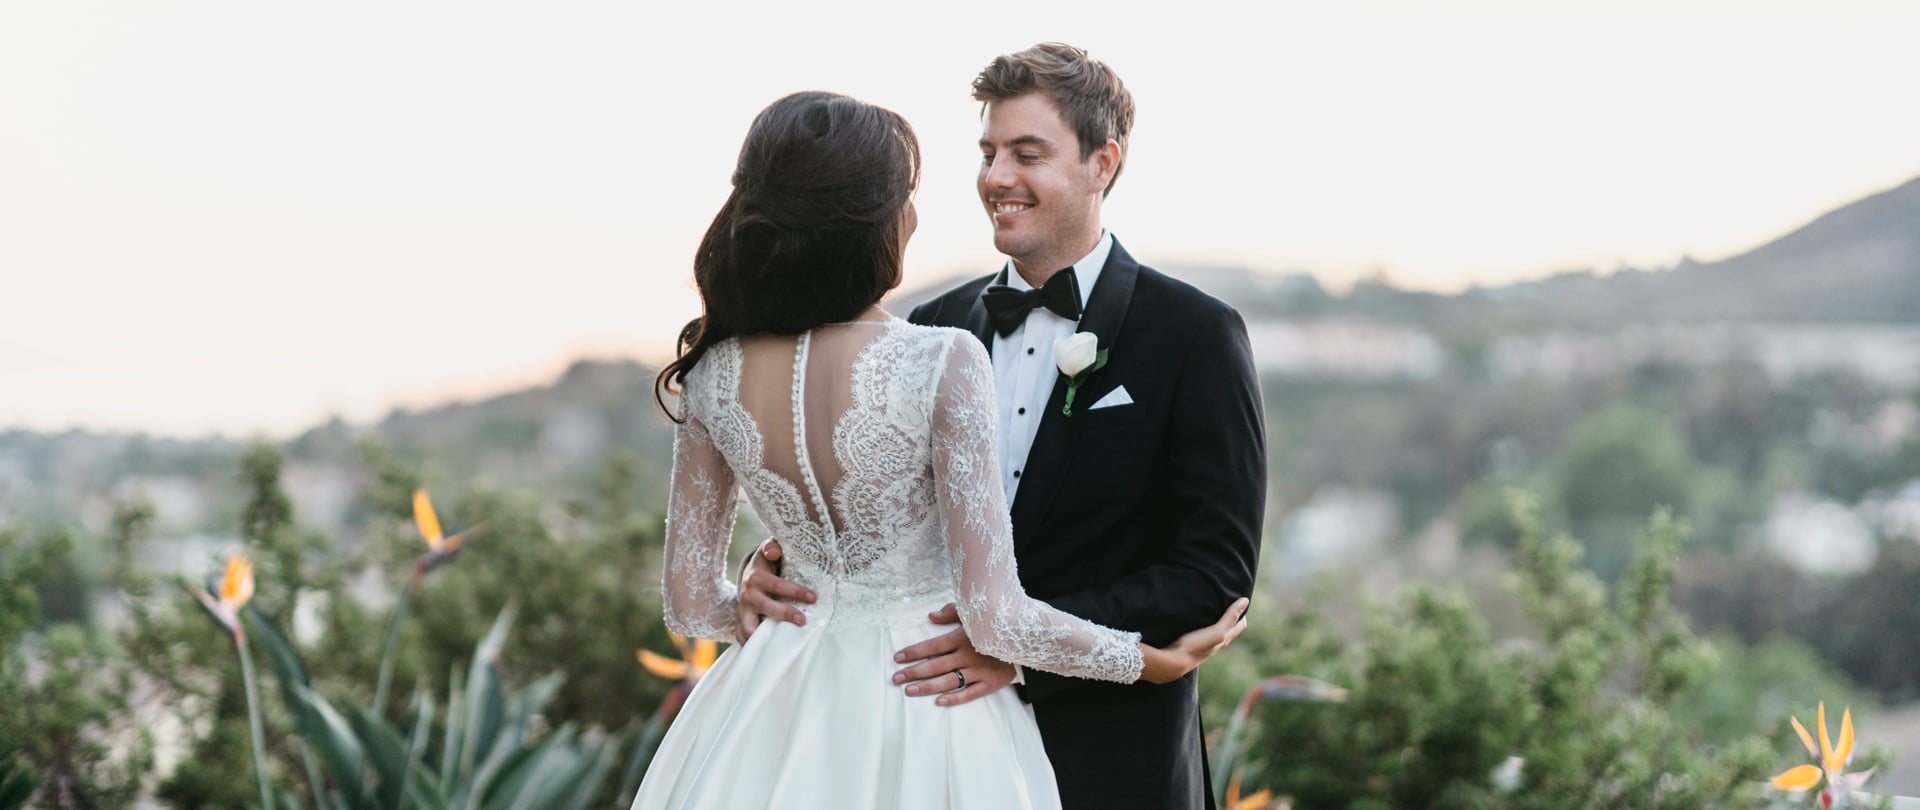 Danielle & Chris Wedding Video Filmed at California, United States